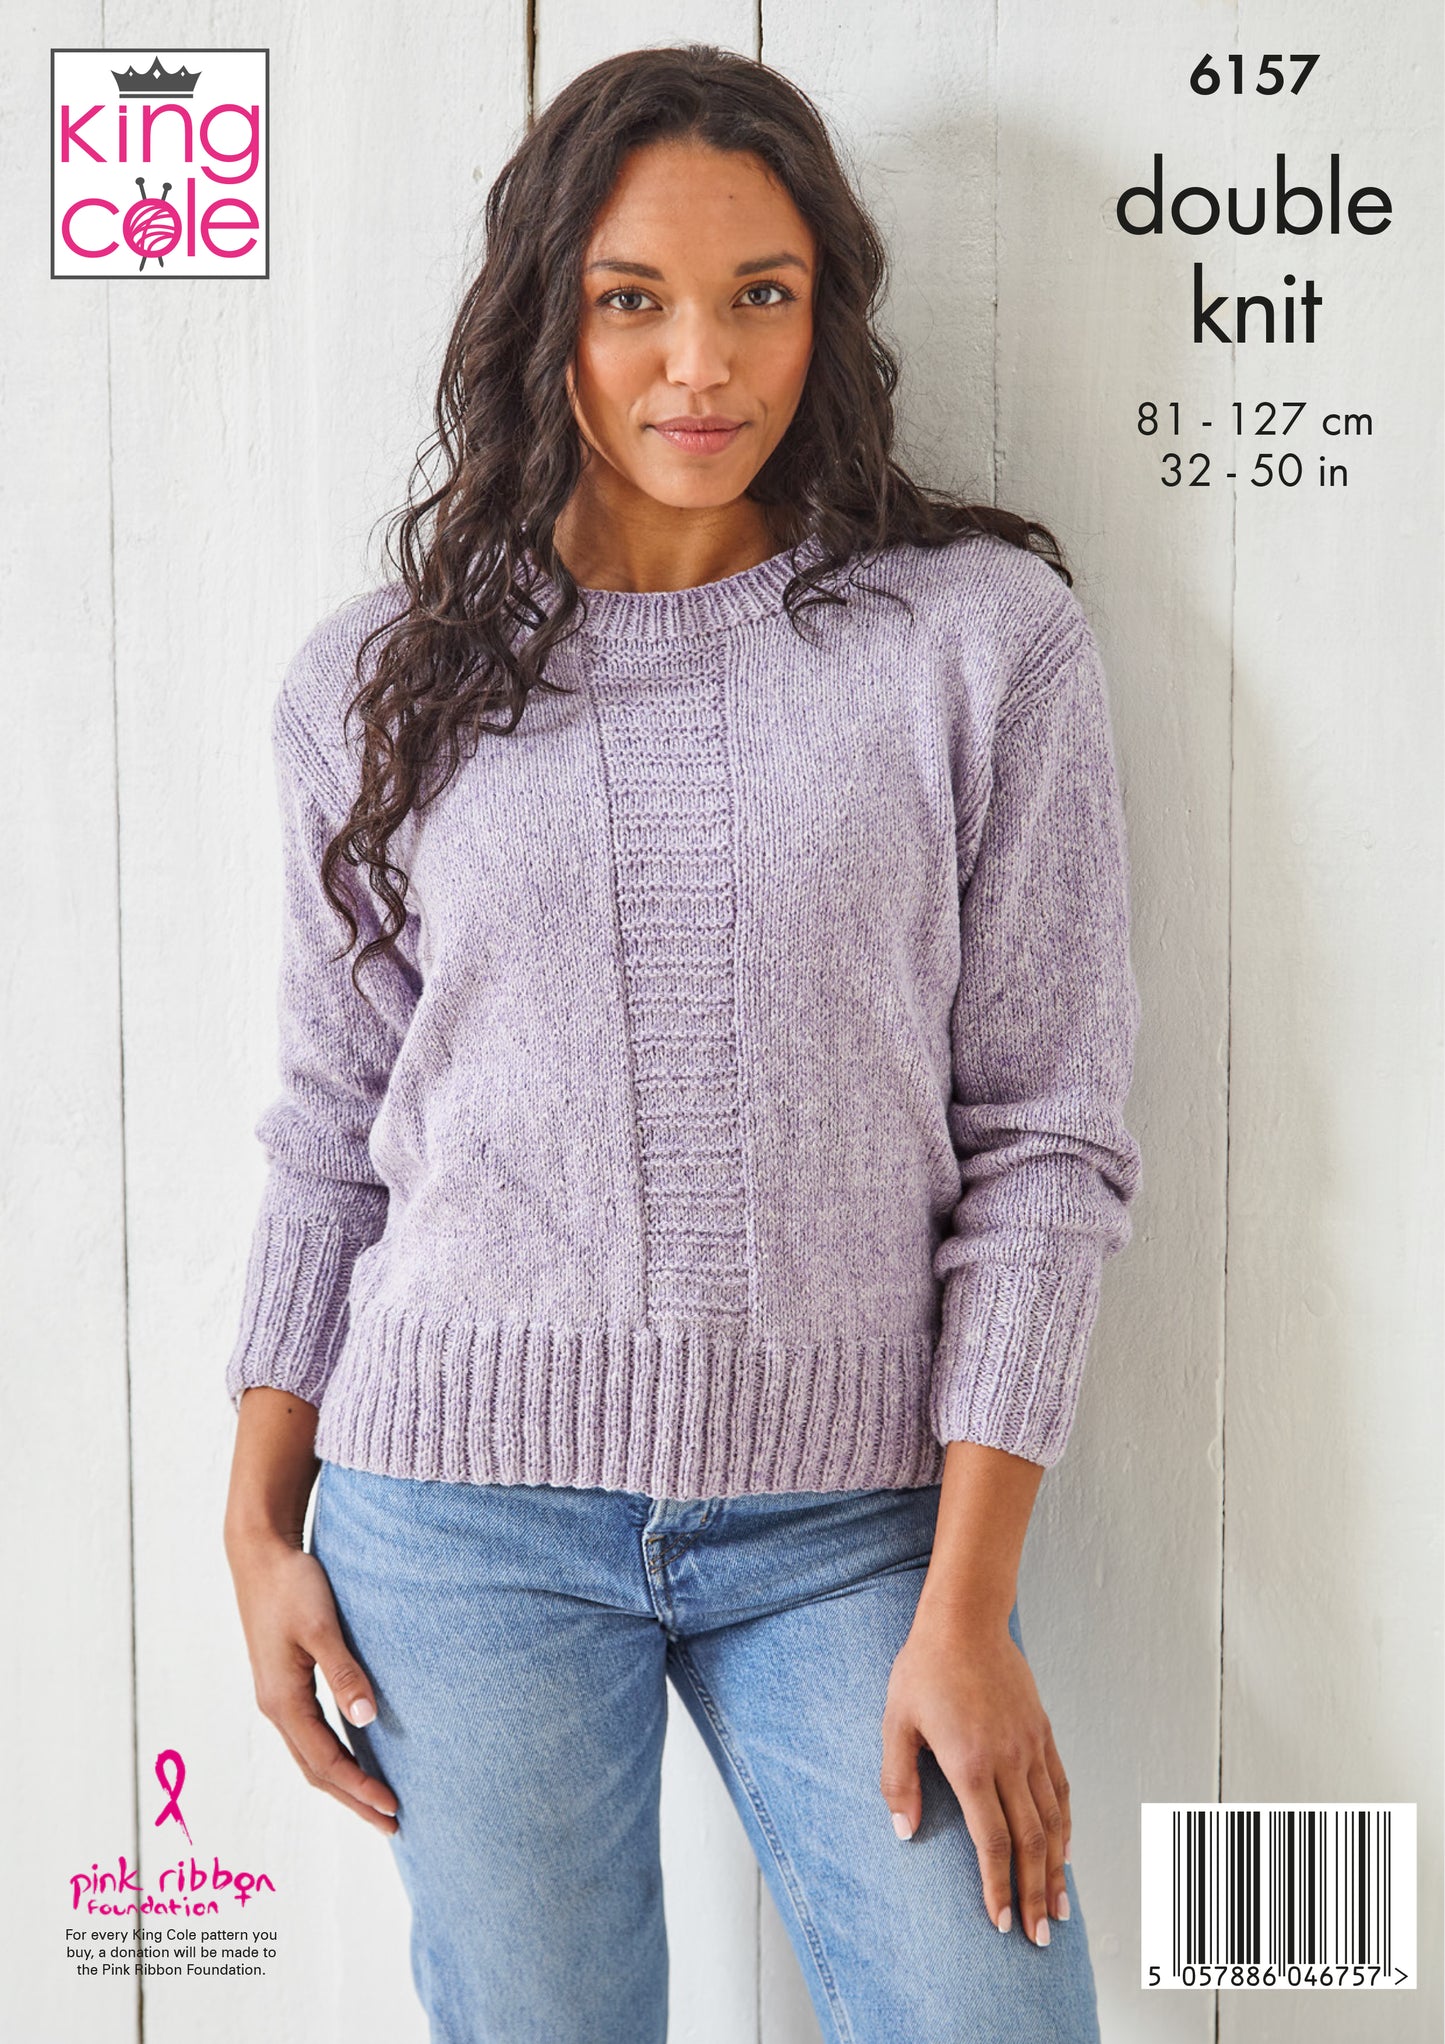 Knitting Pattern 6157 - Cardigan & Sweater Knitted in Simply Denim DK